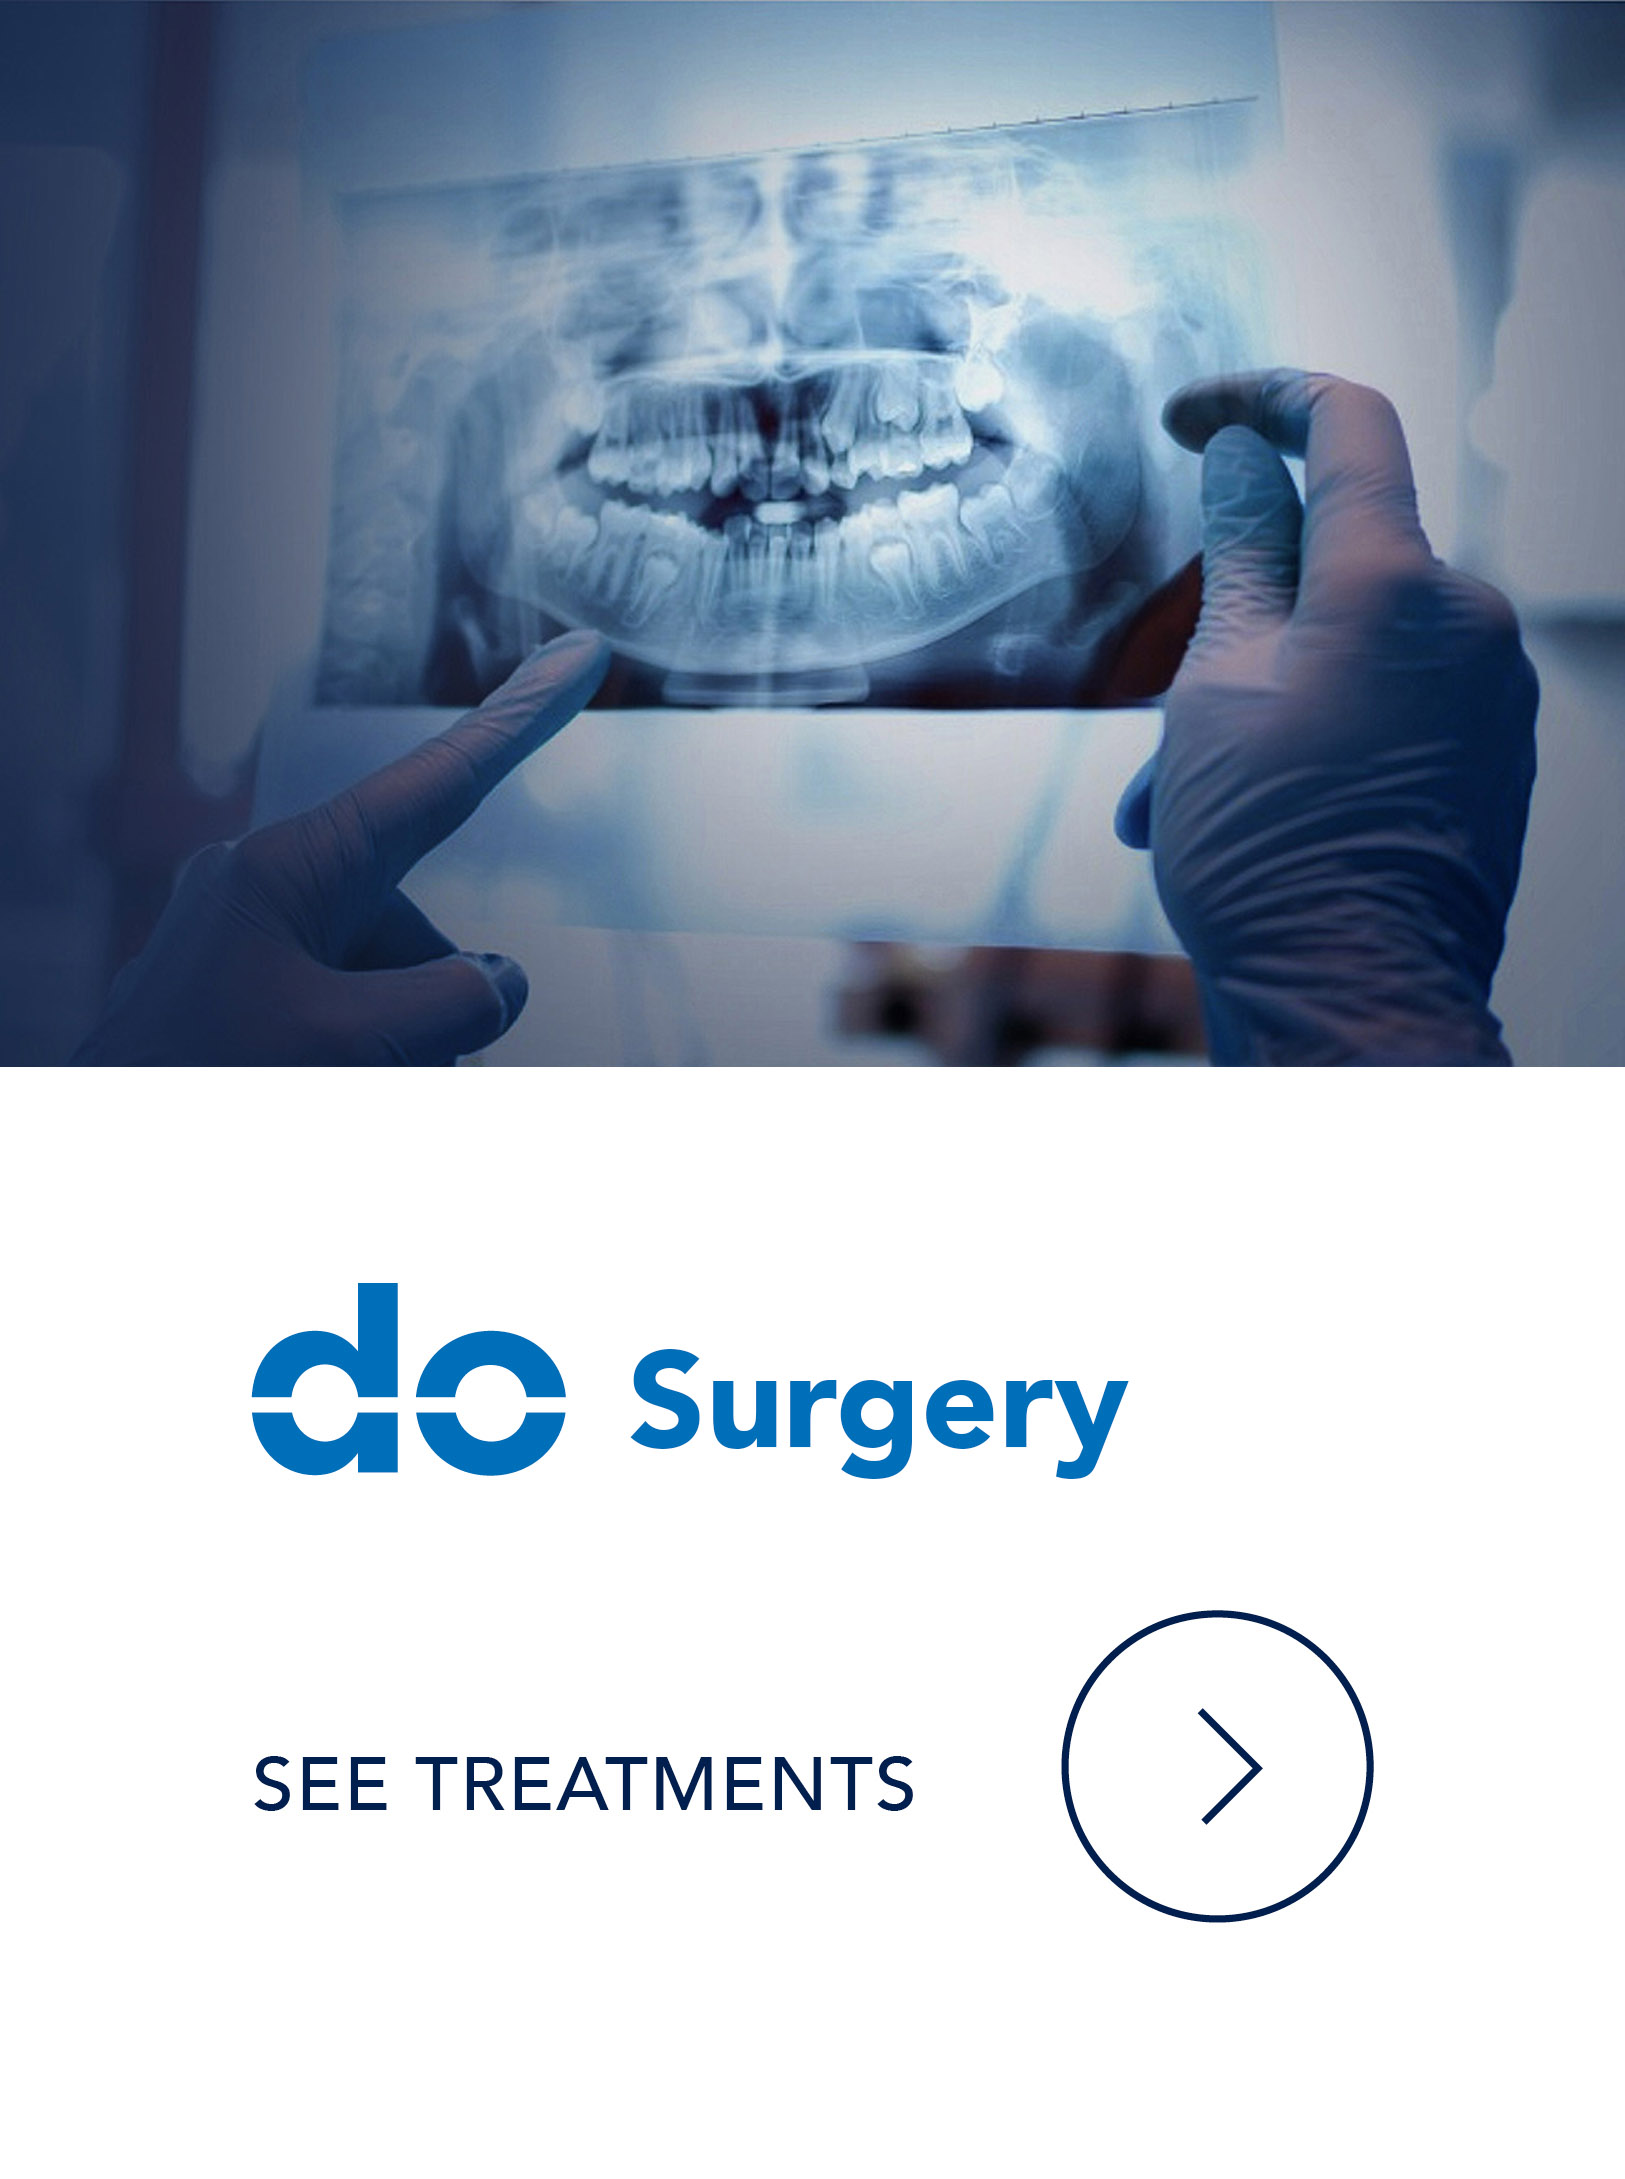 Deakin Orthodontic Specialists